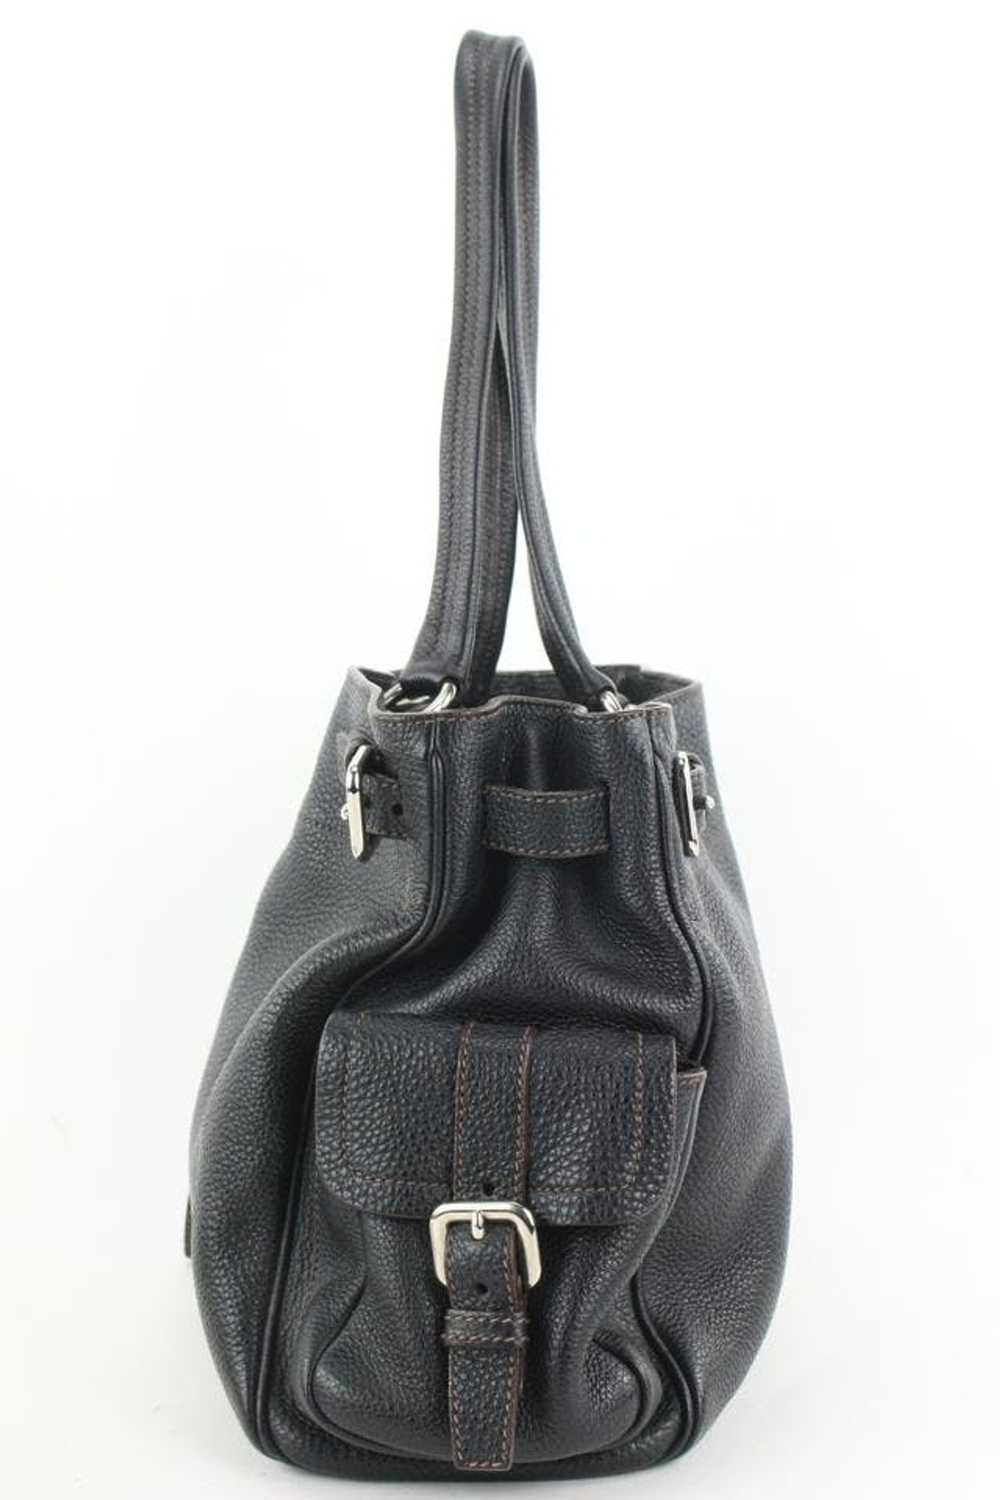 Prada Prada Leather Belt Buckle Tote Bag 455pr62 - image 6